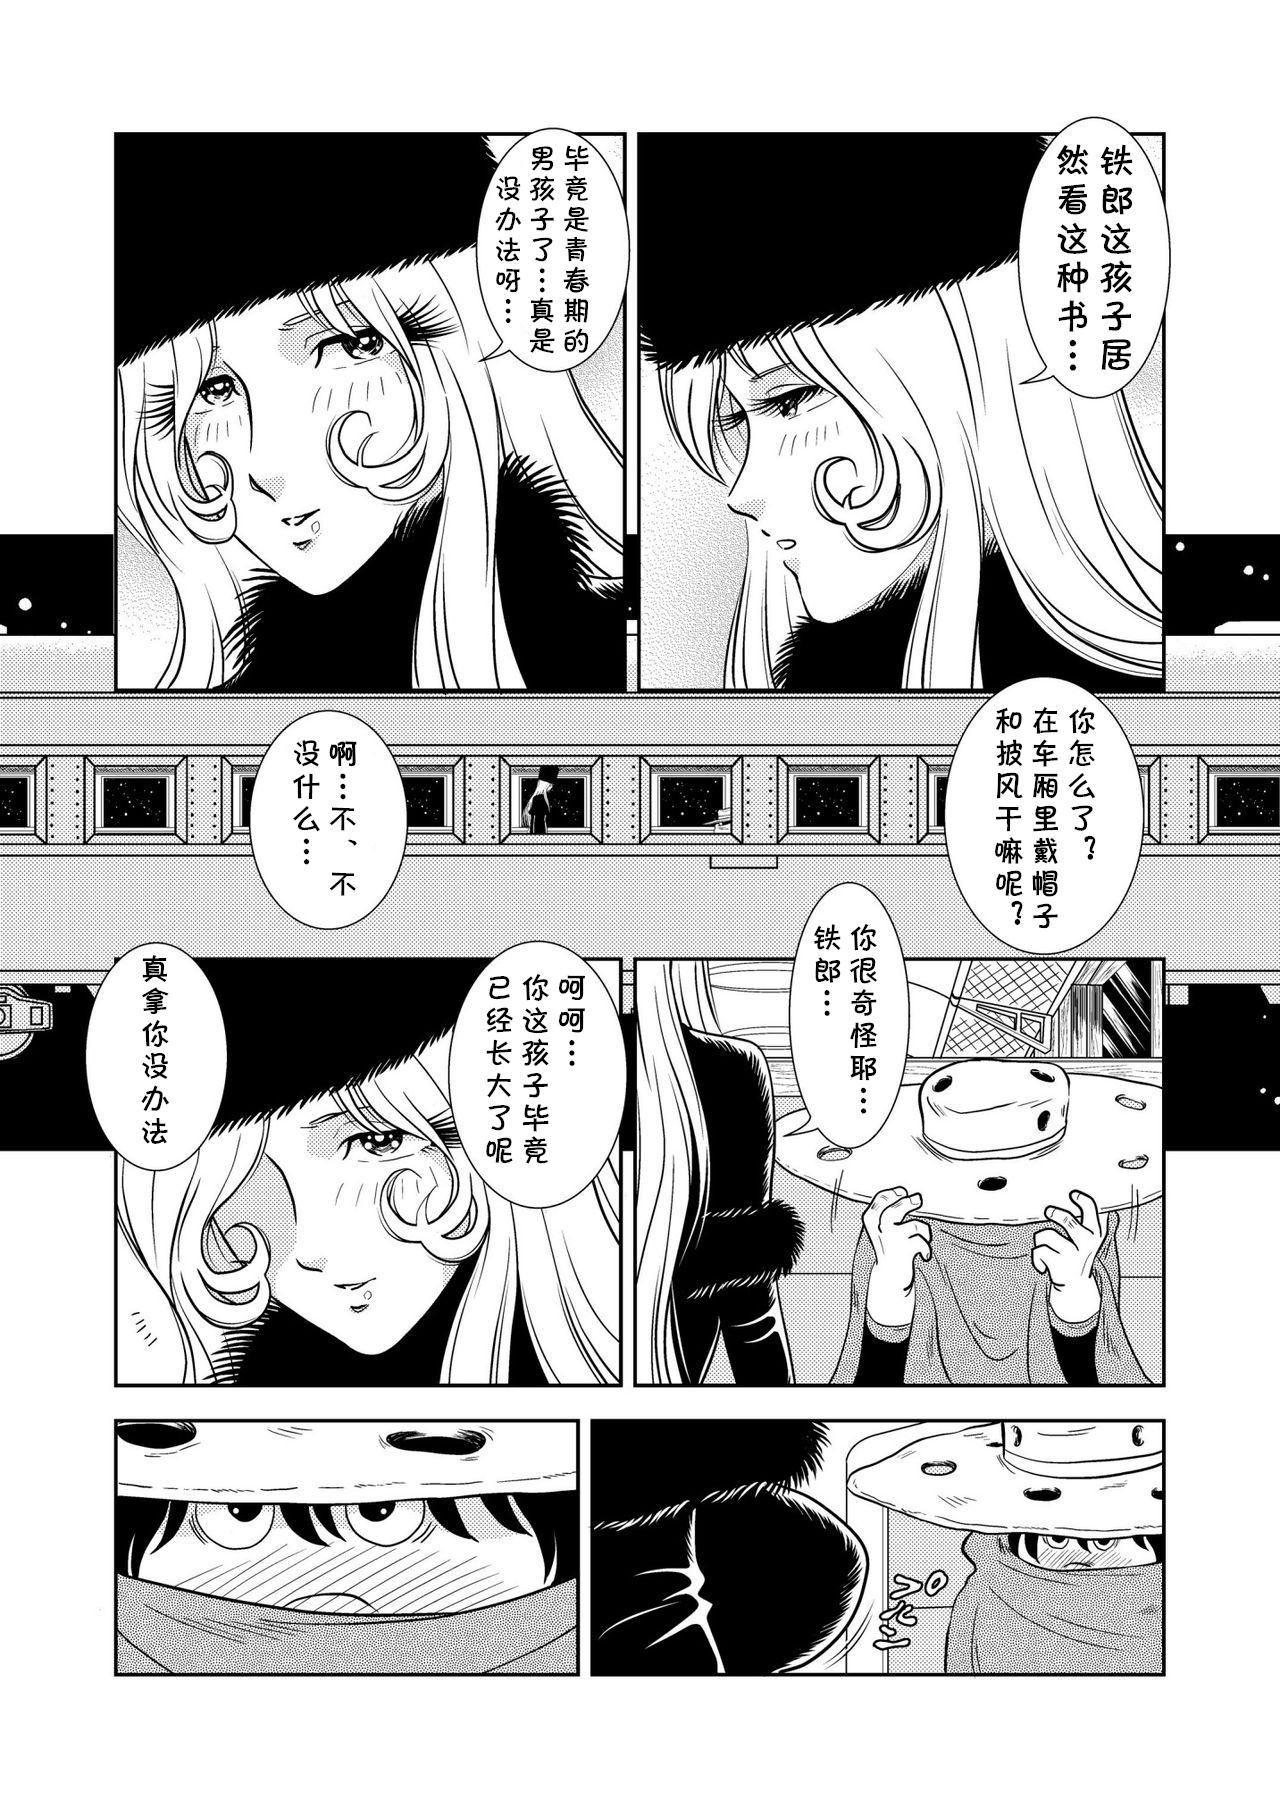 Flagra Maetel Story 2 - Galaxy express 999 | ginga tetsudou 999 Cartoon - Page 4